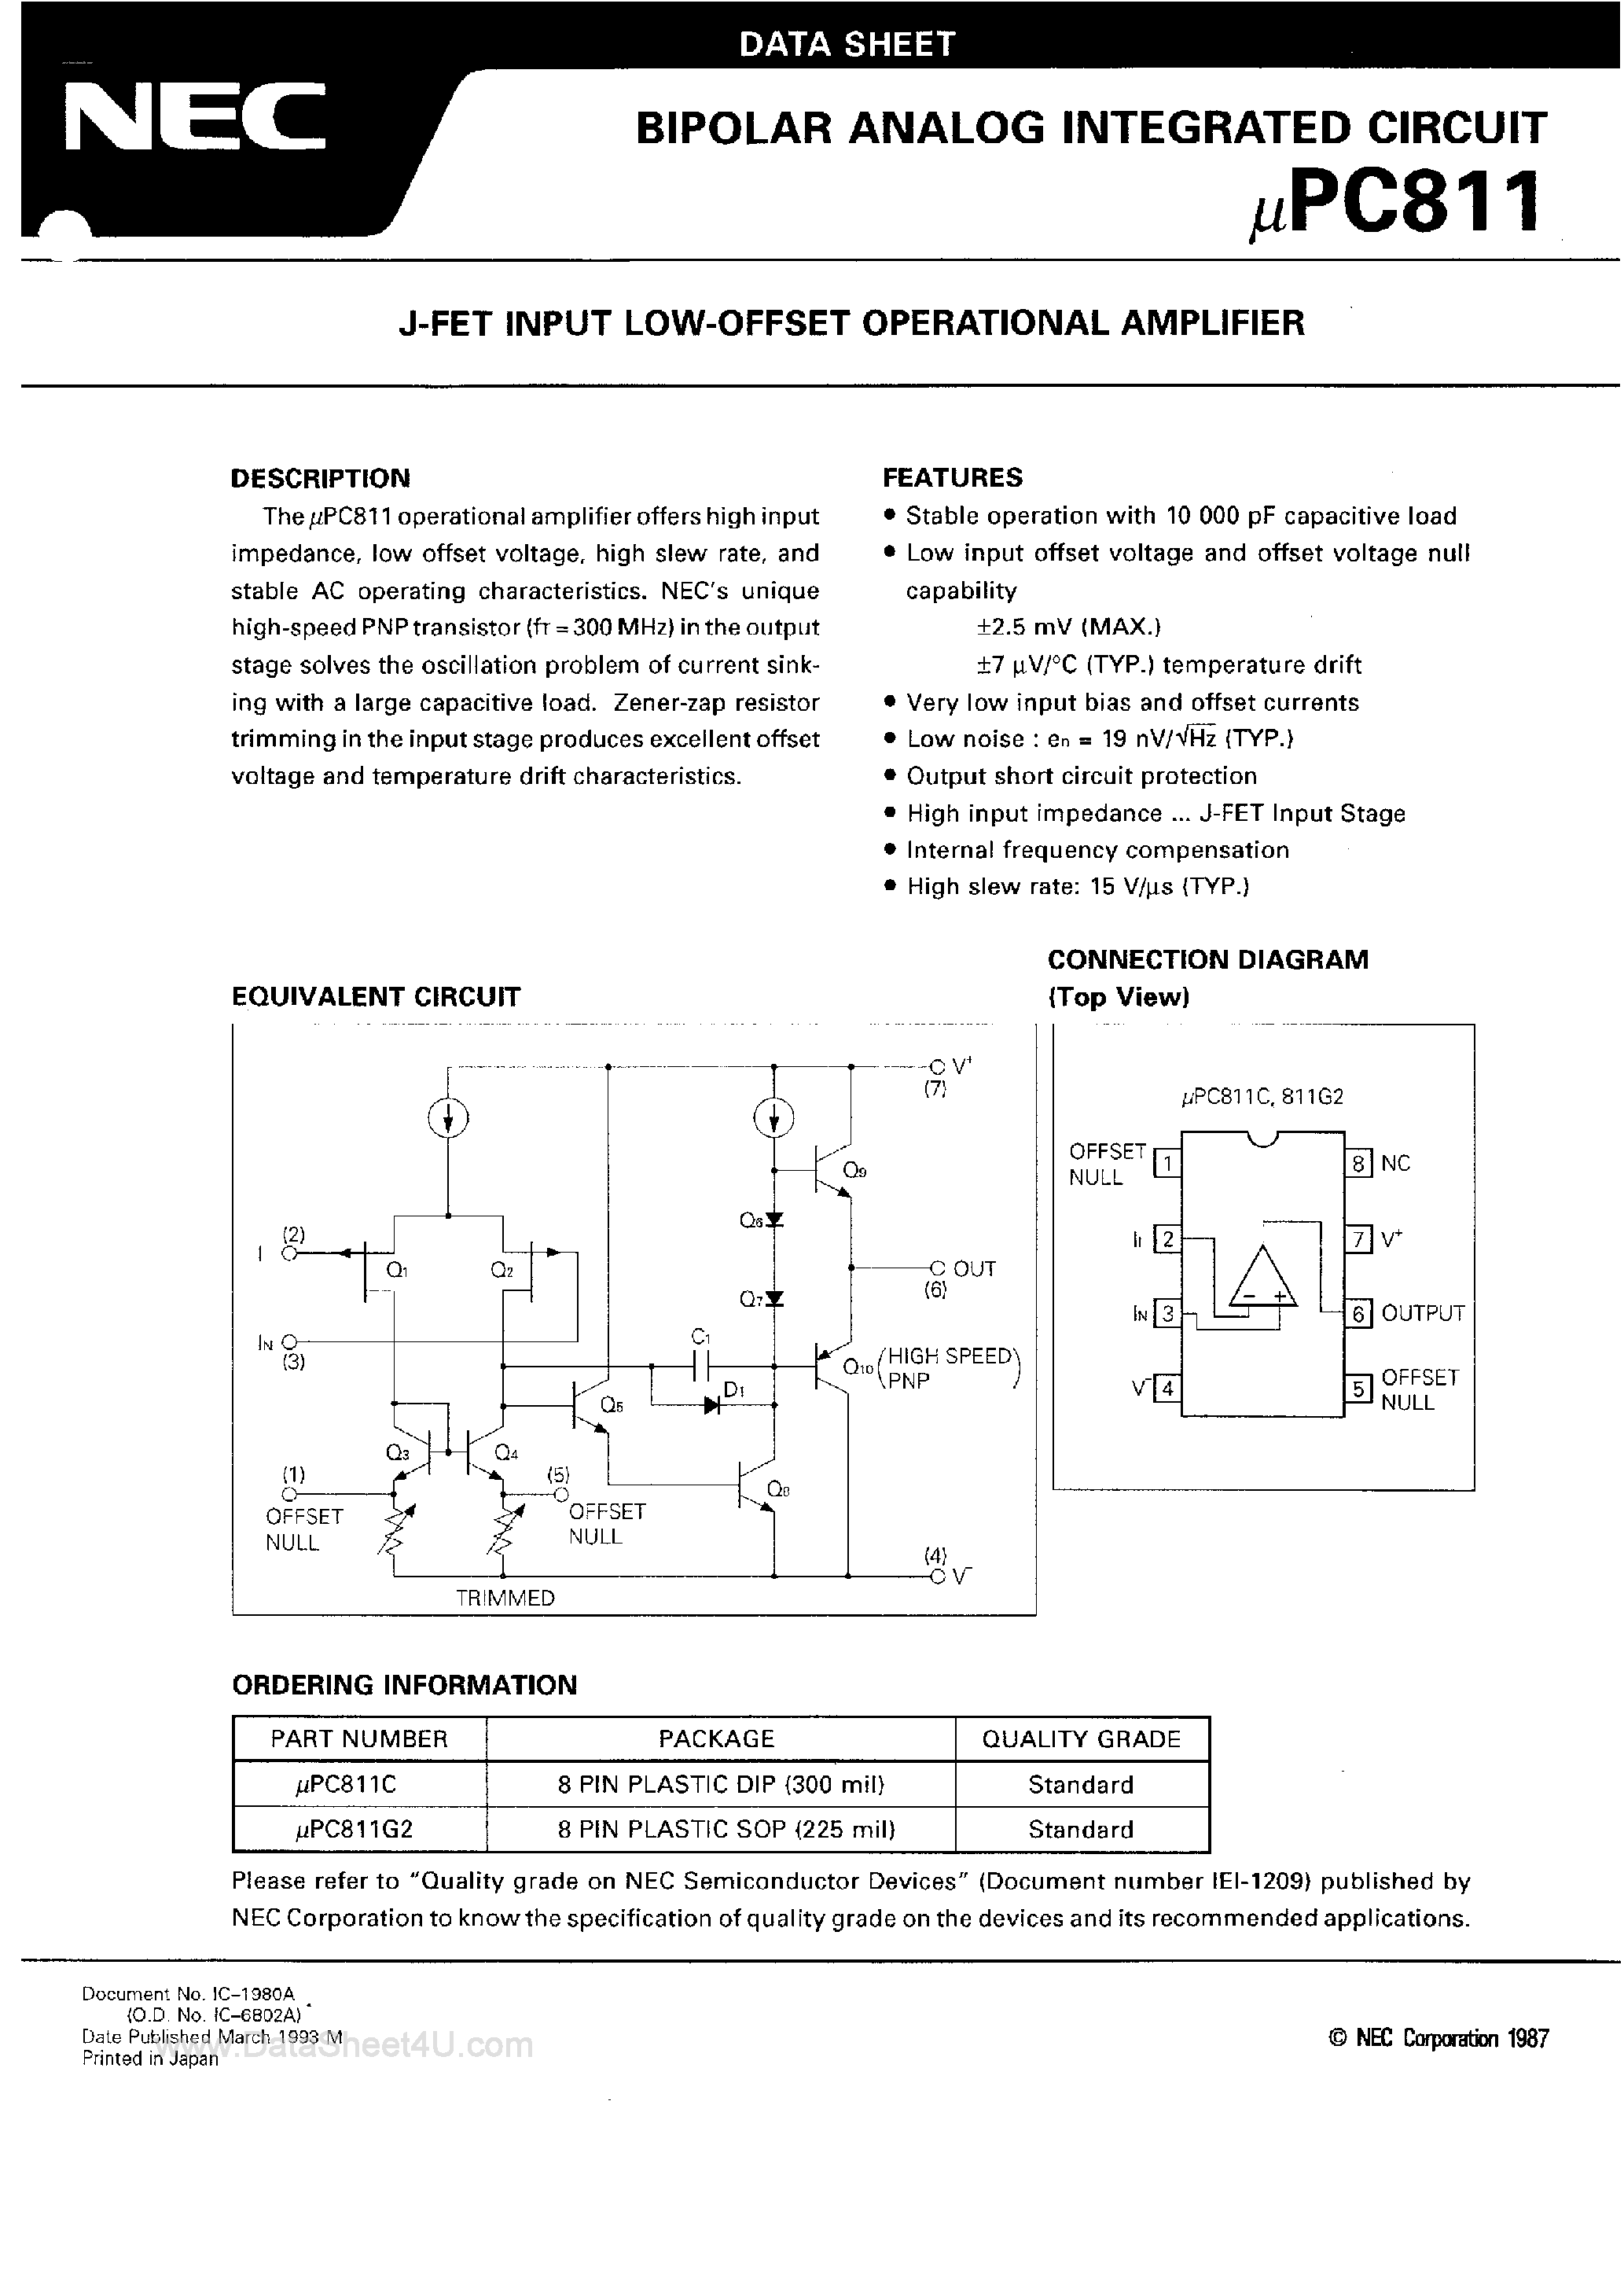 Datasheet UPC811 - J-FET Input Low Offset Operational Amplifier page 1